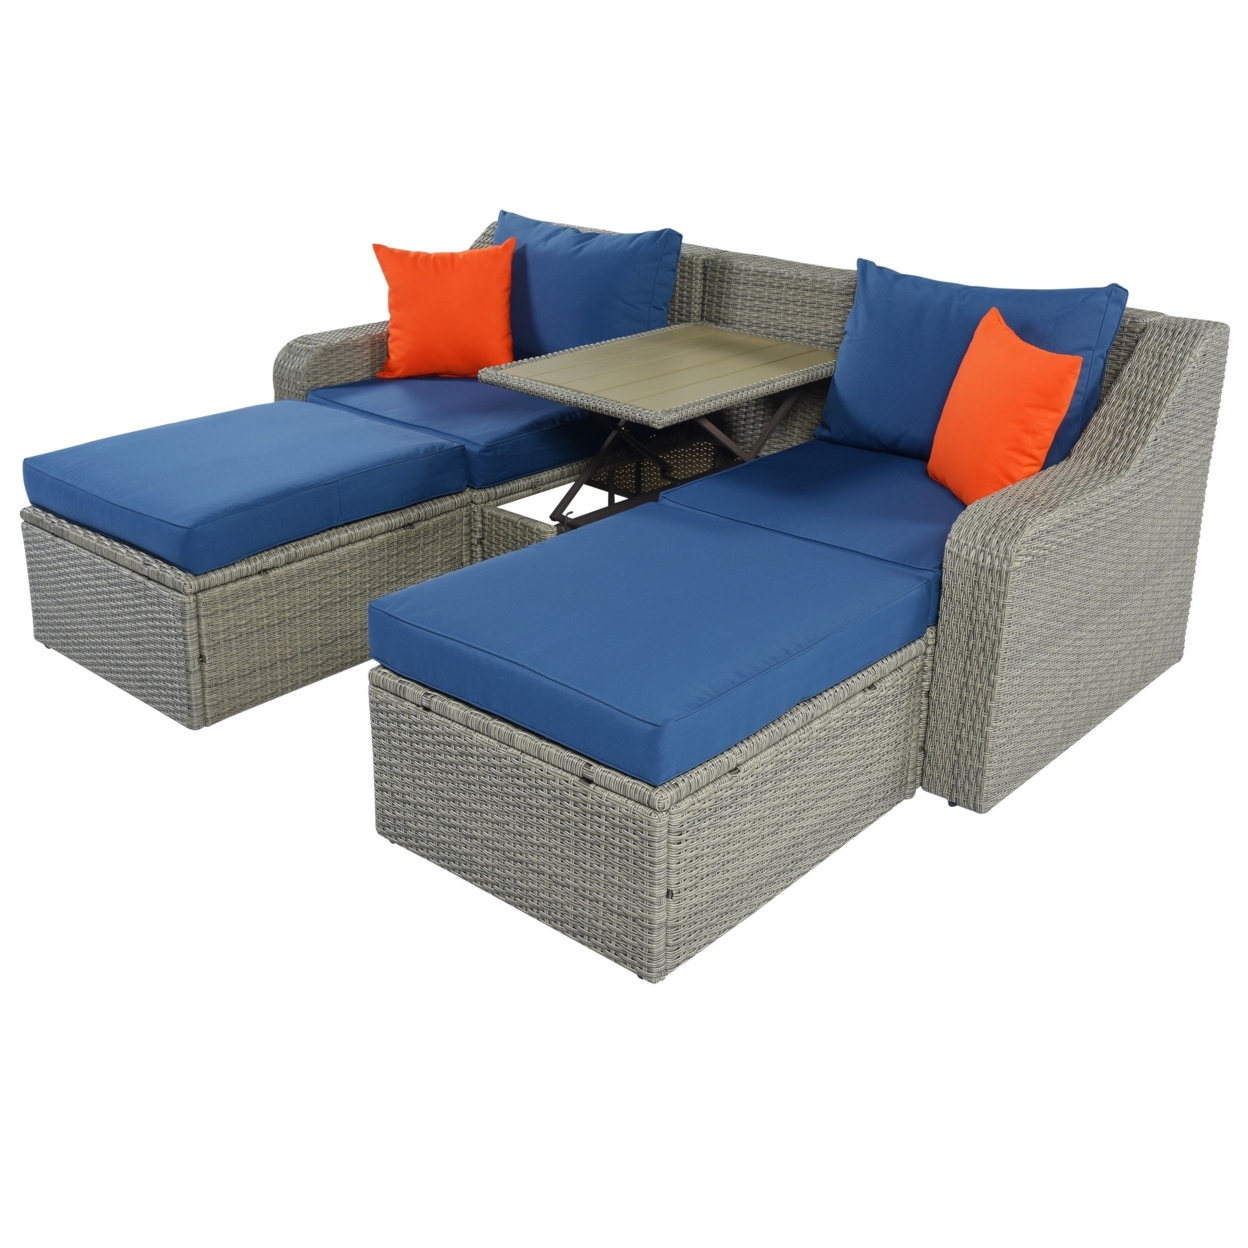 3 Piece Patio Sofa Set With Lift Top Table, Gray Rattan, Blue Cushions- Saltoro Sherpi